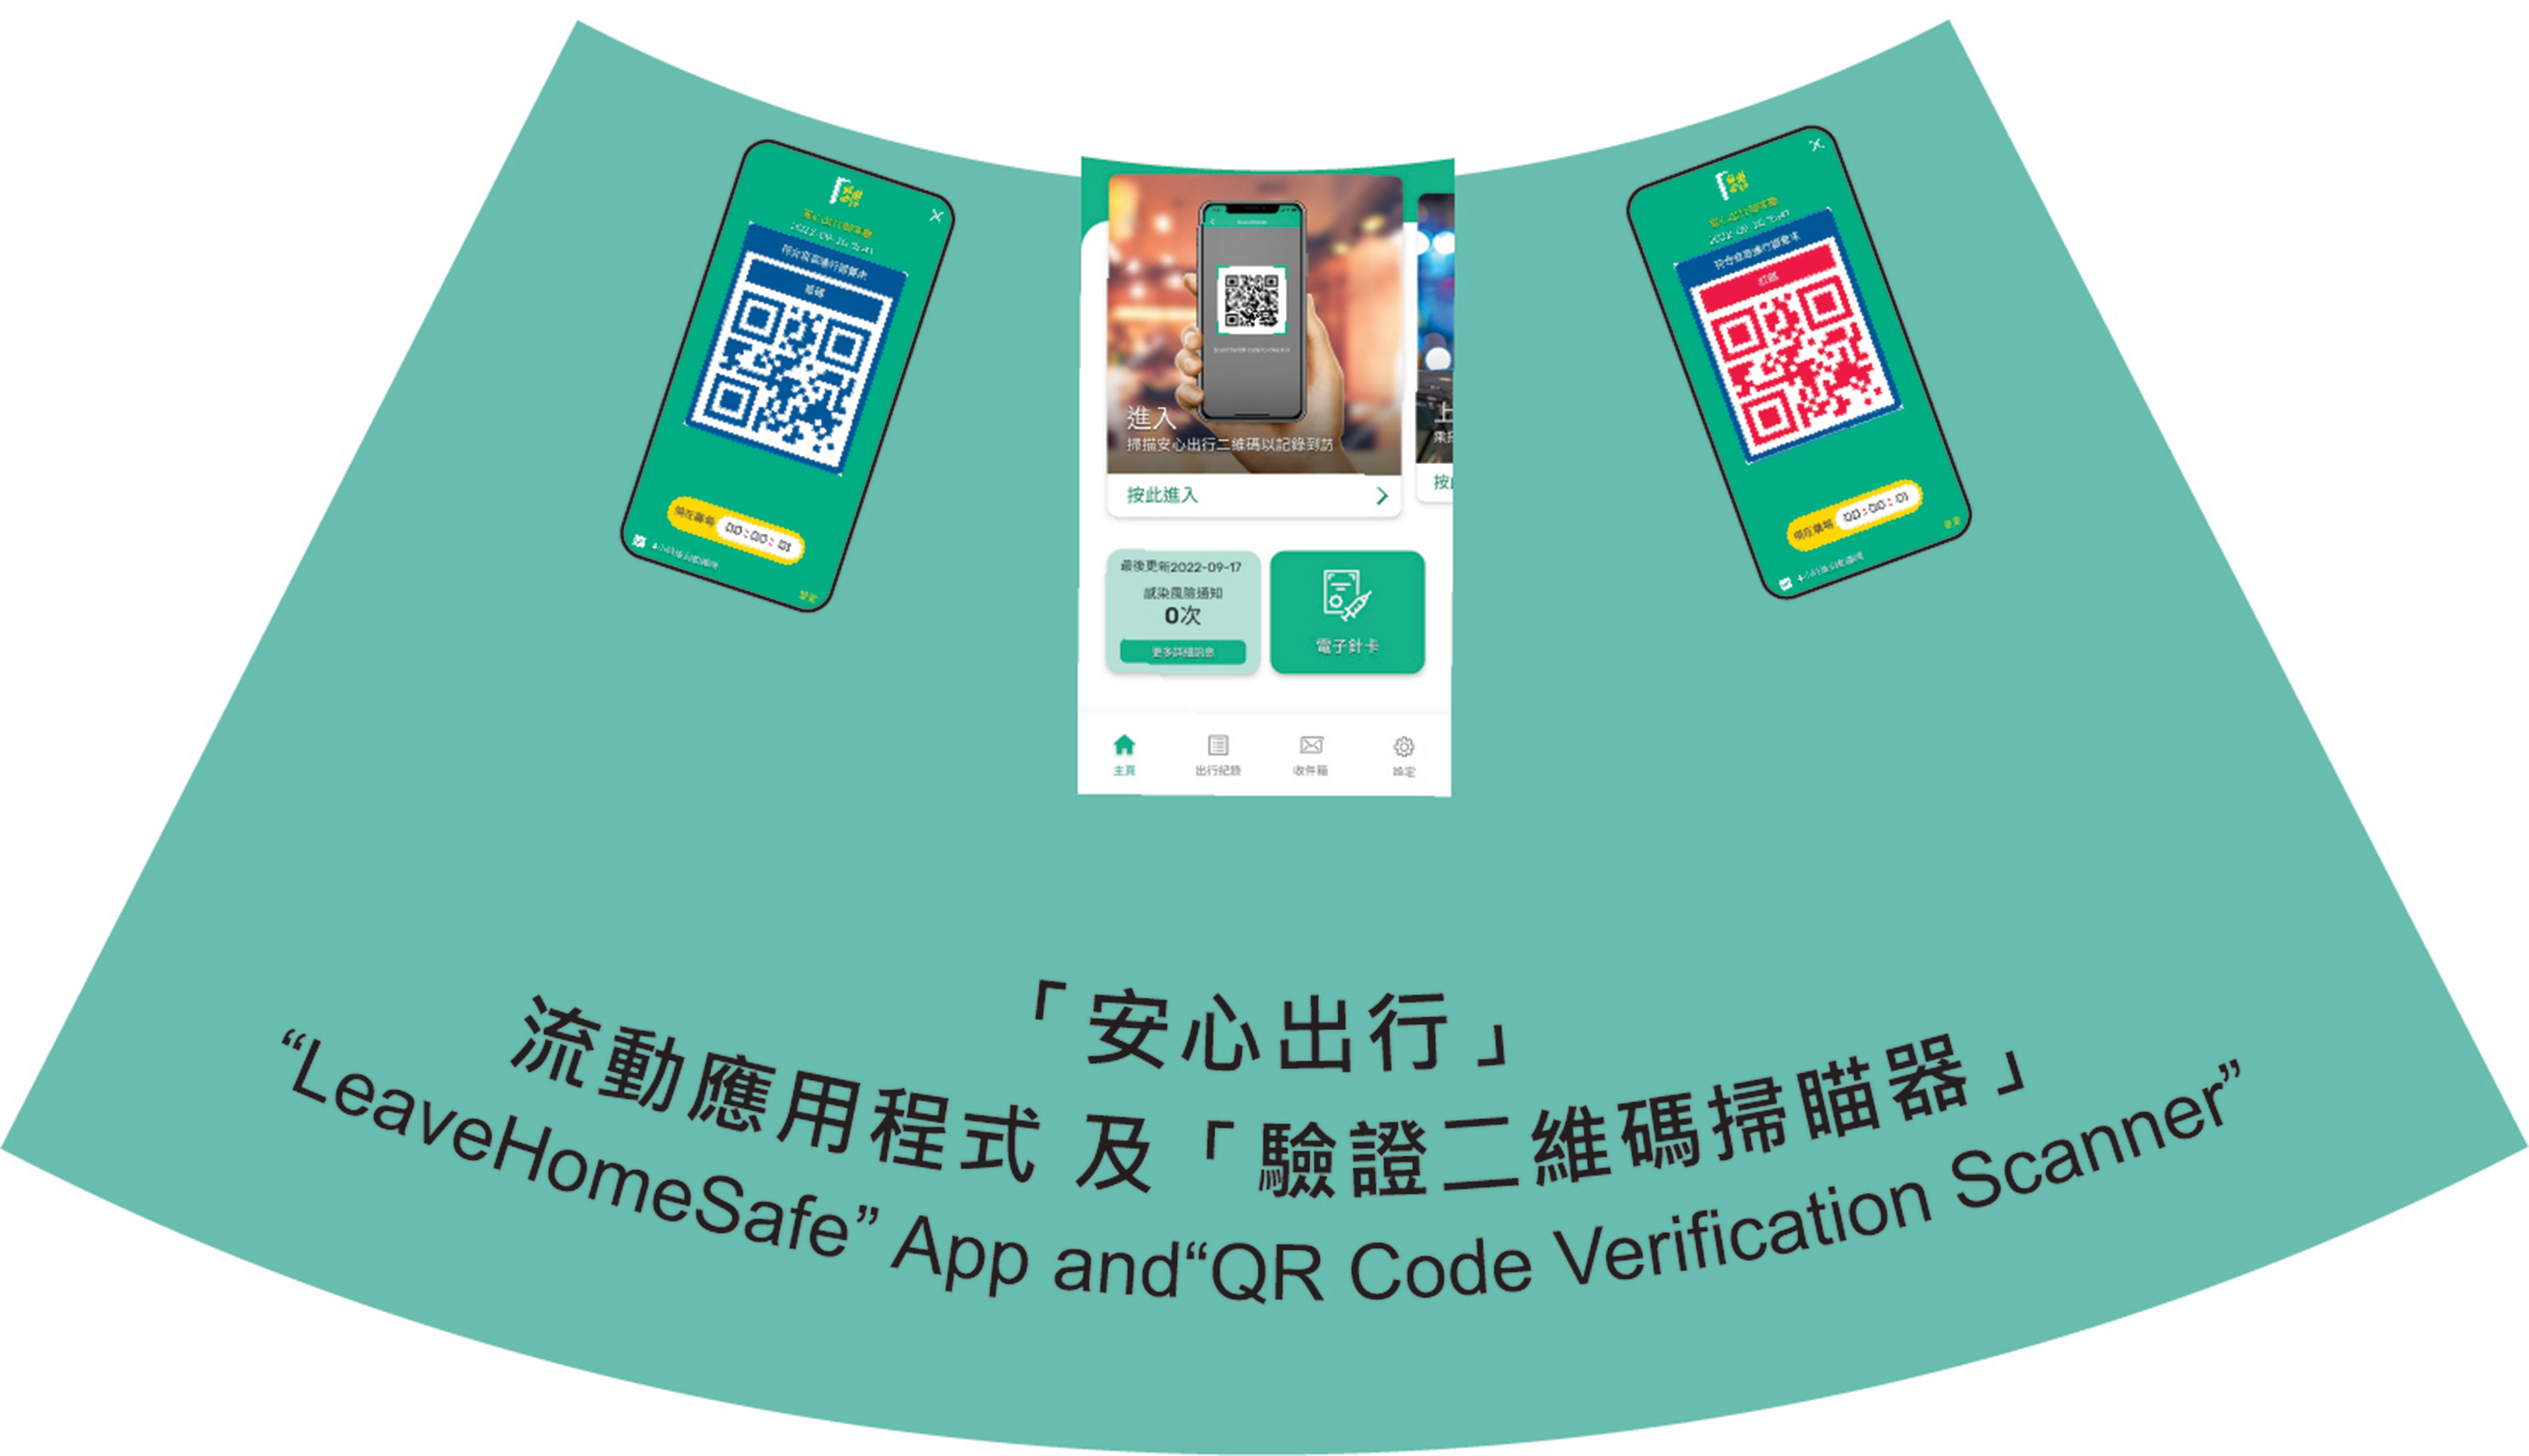 “LeaveHomeSafe” Mobile App and“QR Code Verification Scanner”